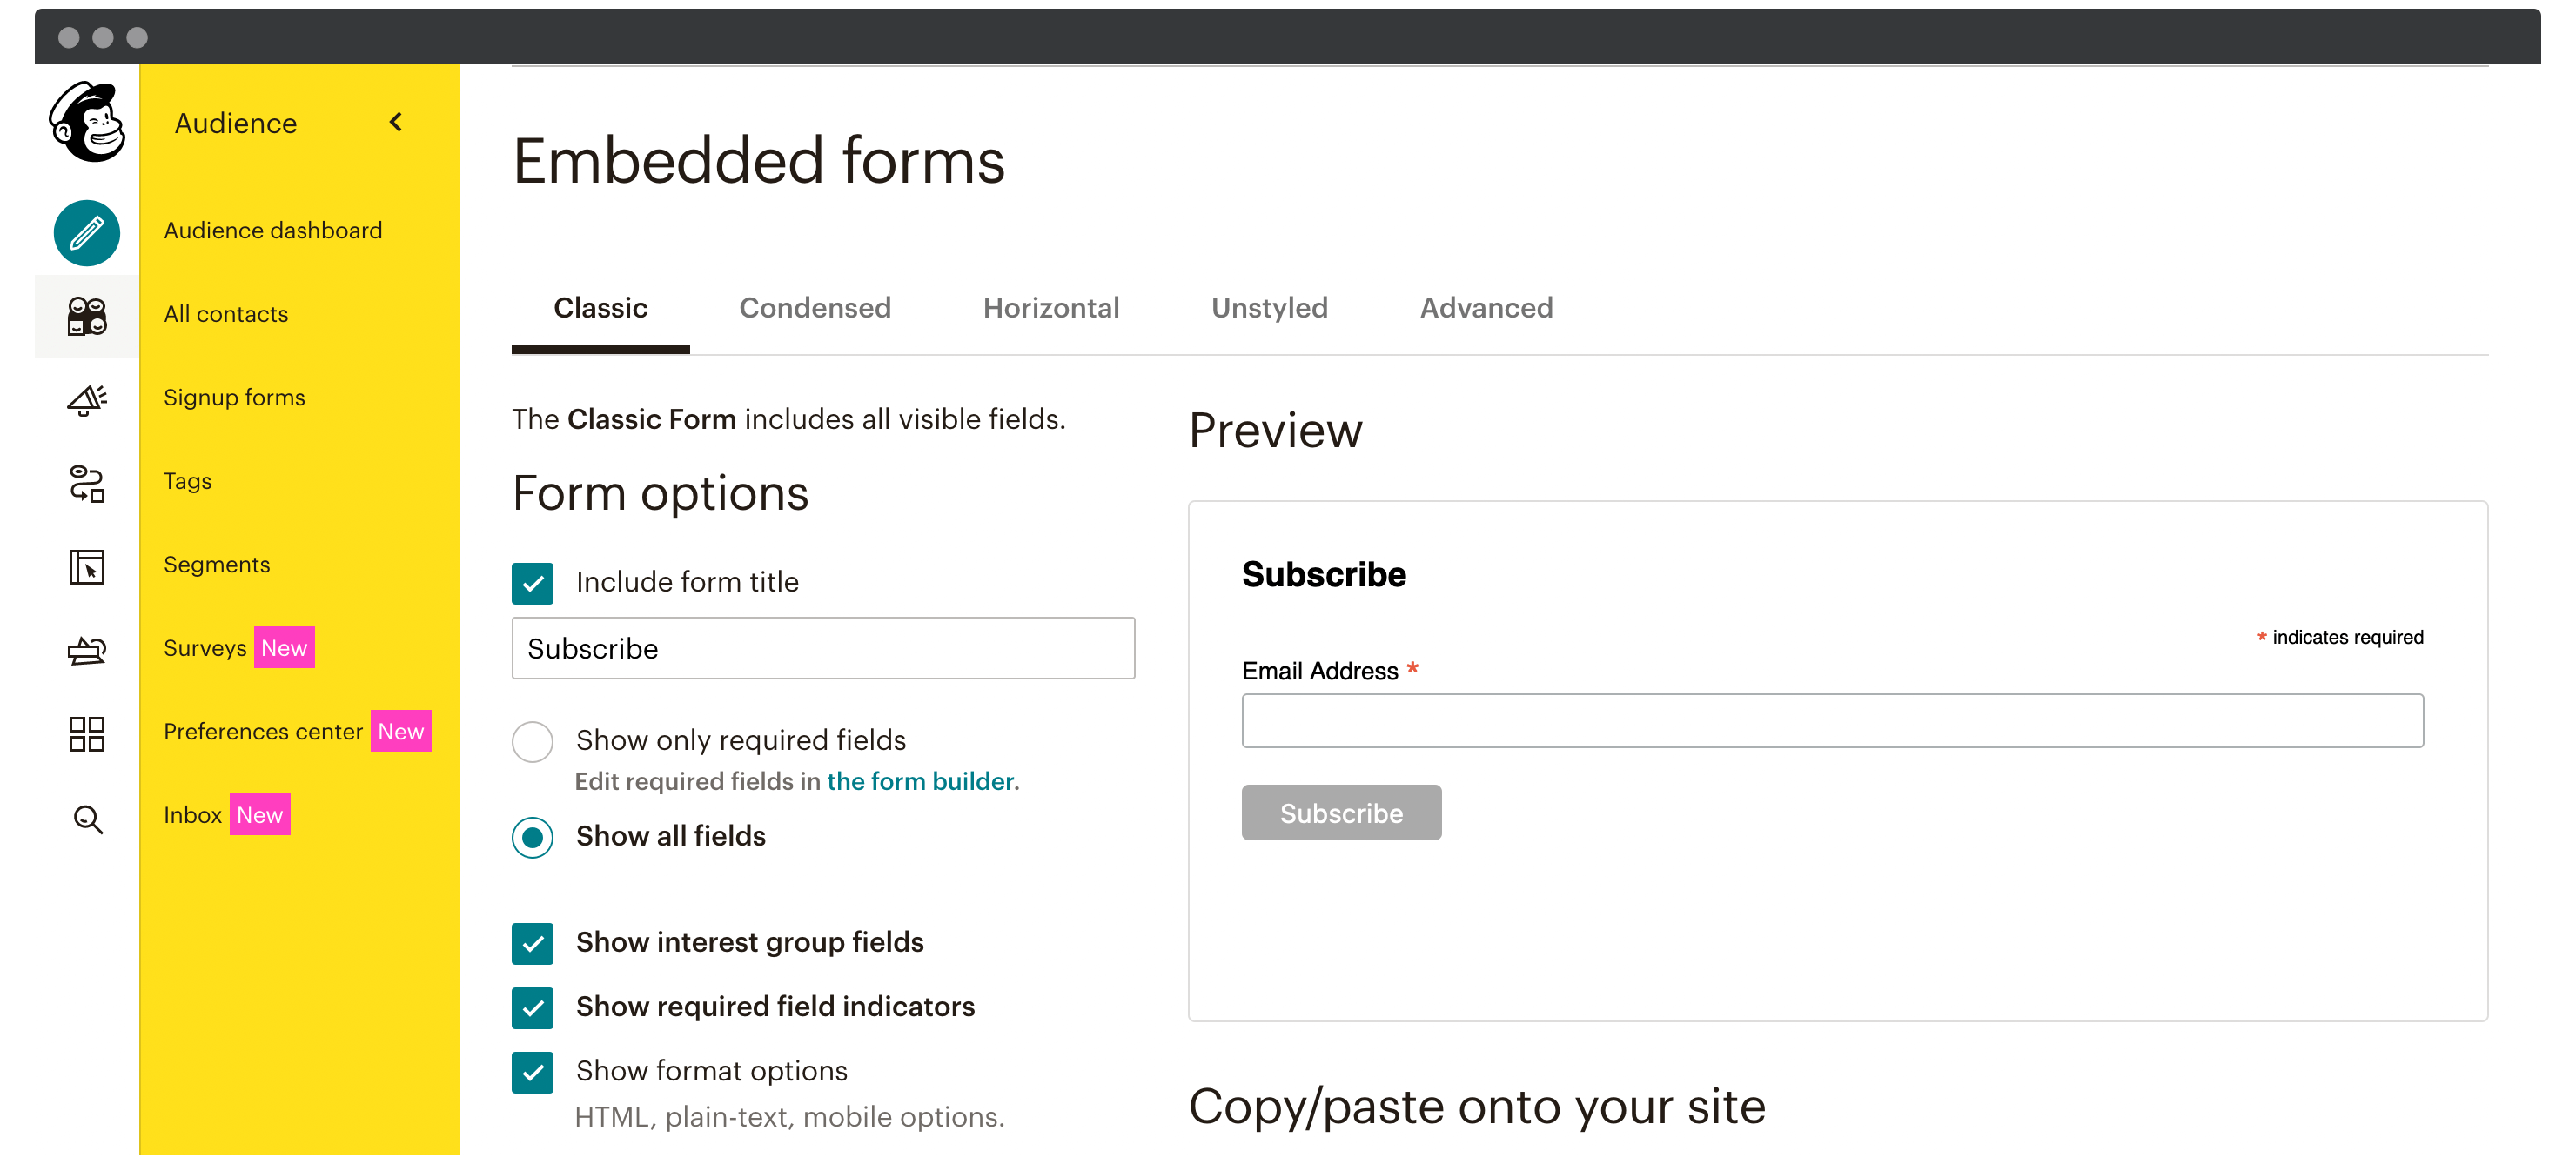 Mailchimp's form embedding options.